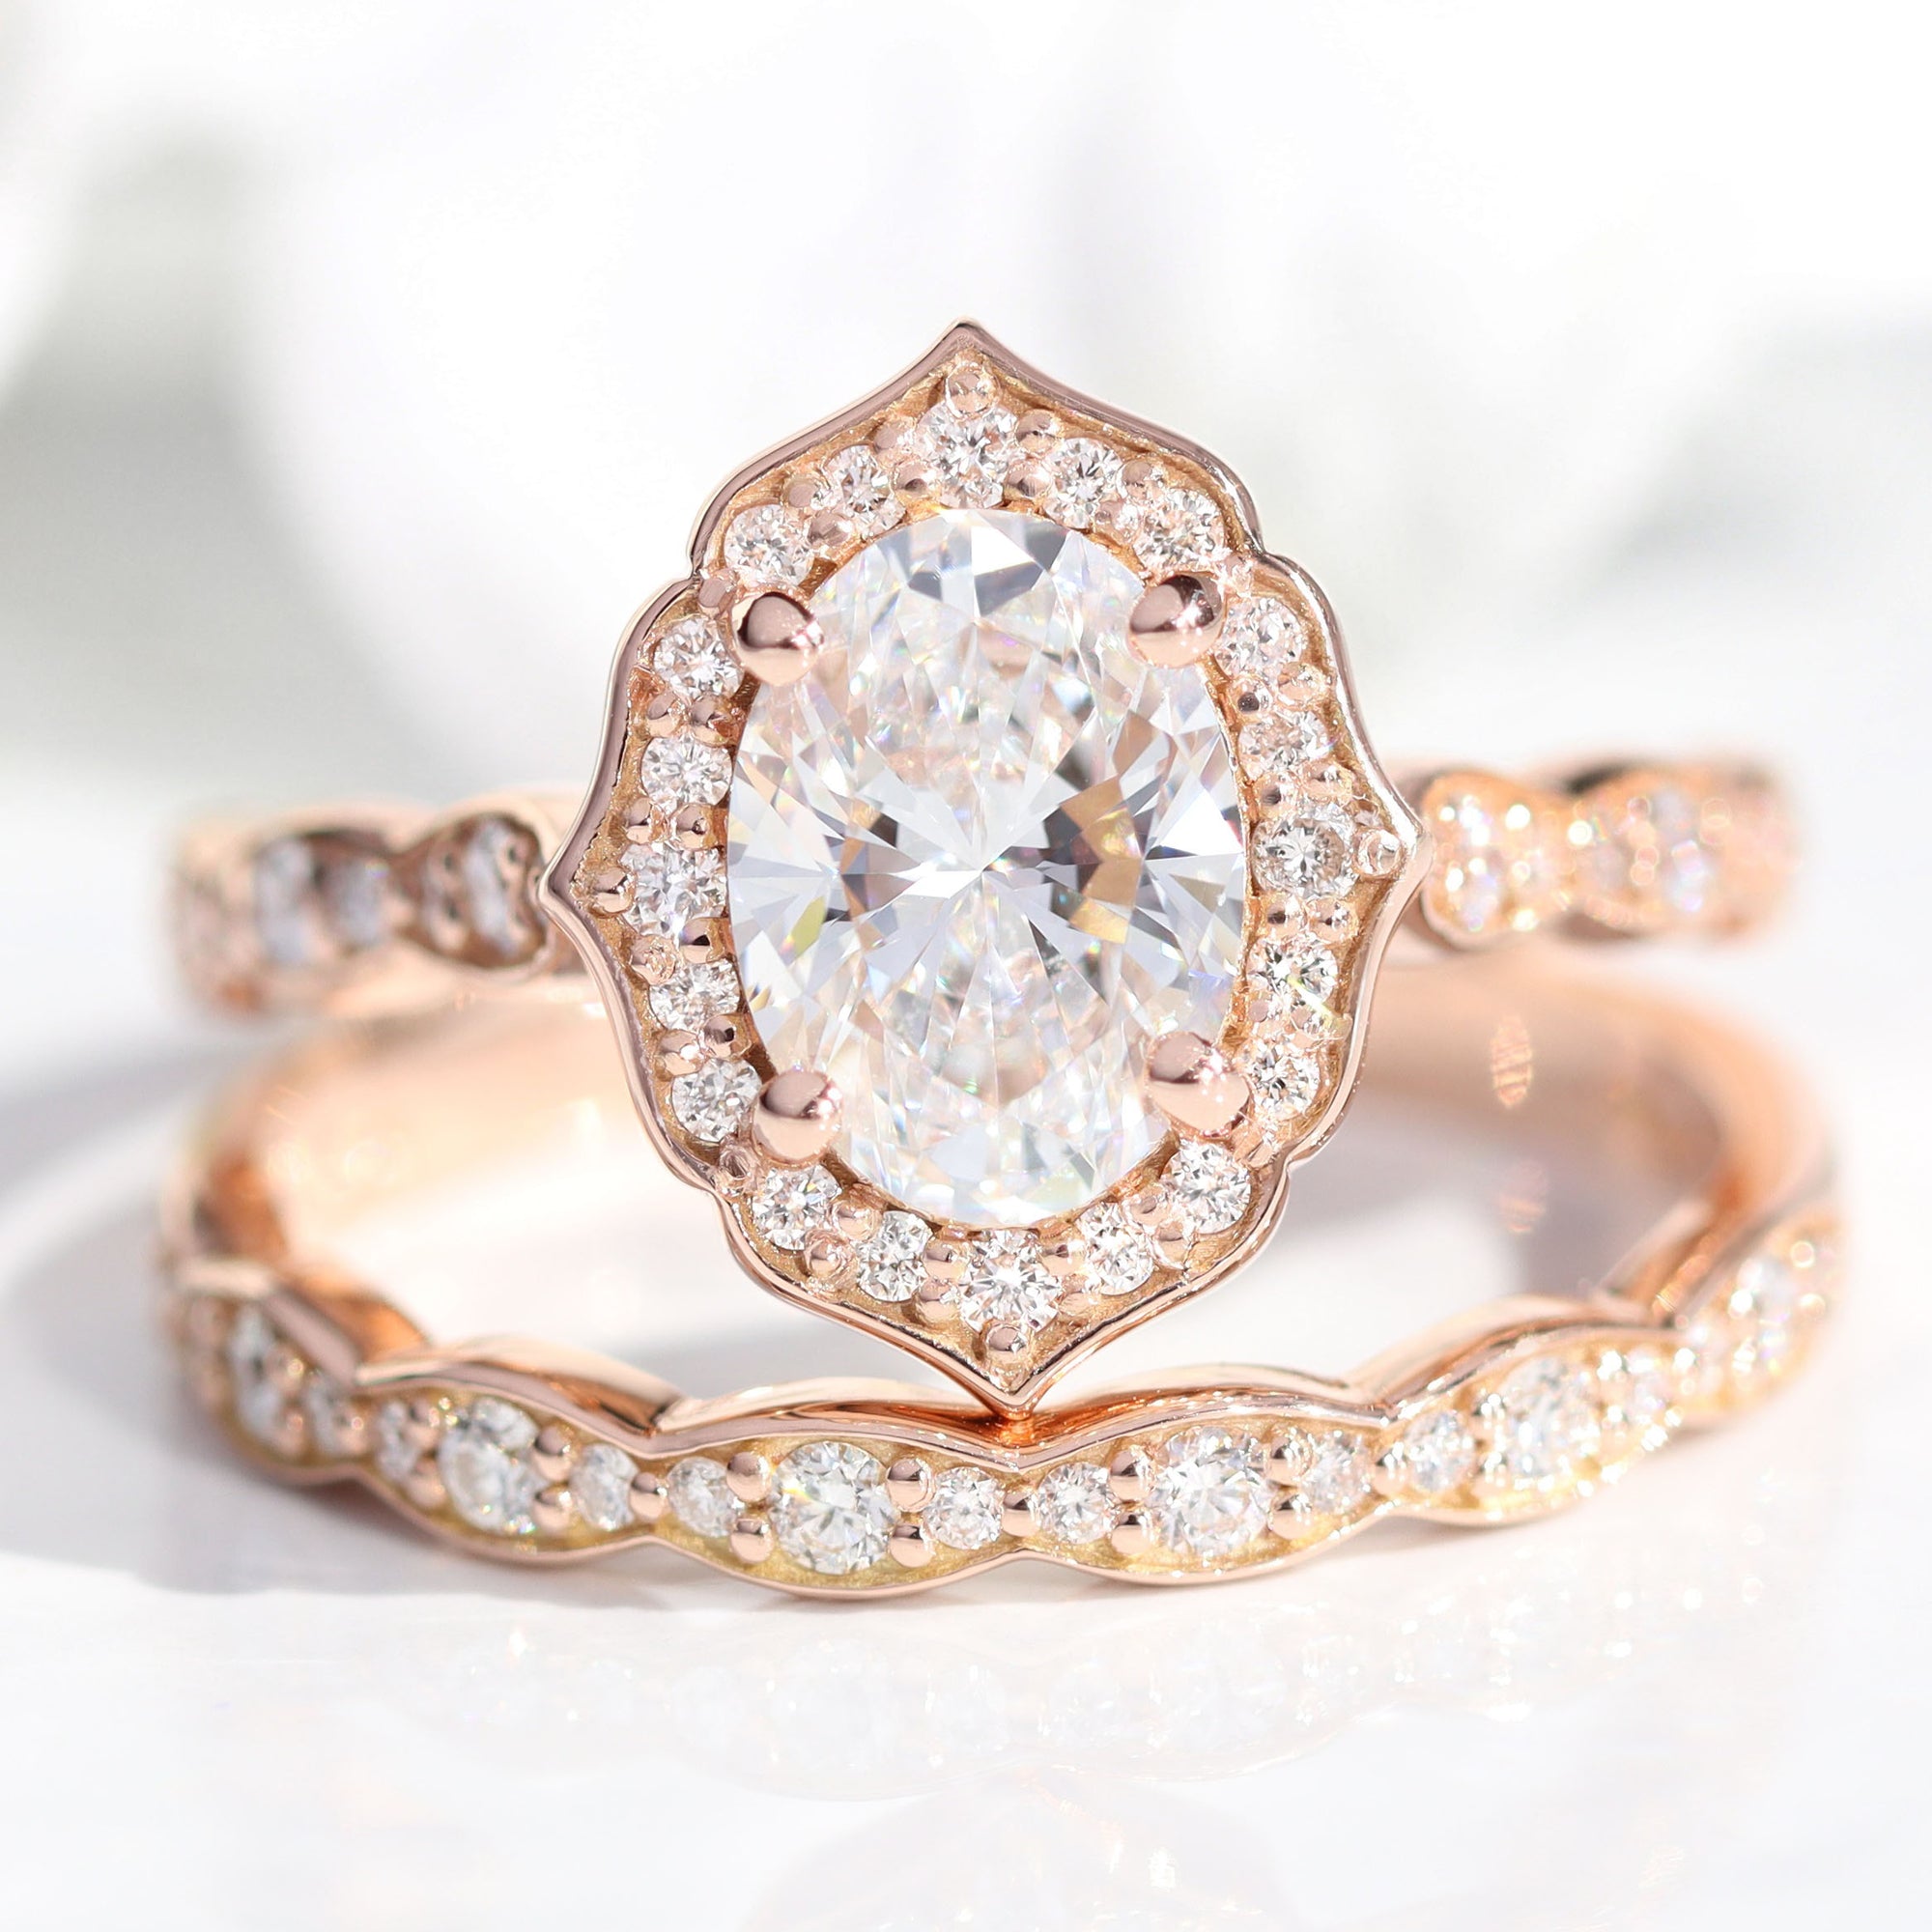 lab diamond ring stack rose gold vintage halo oval diamond engagement ring set La More Design Jewelry